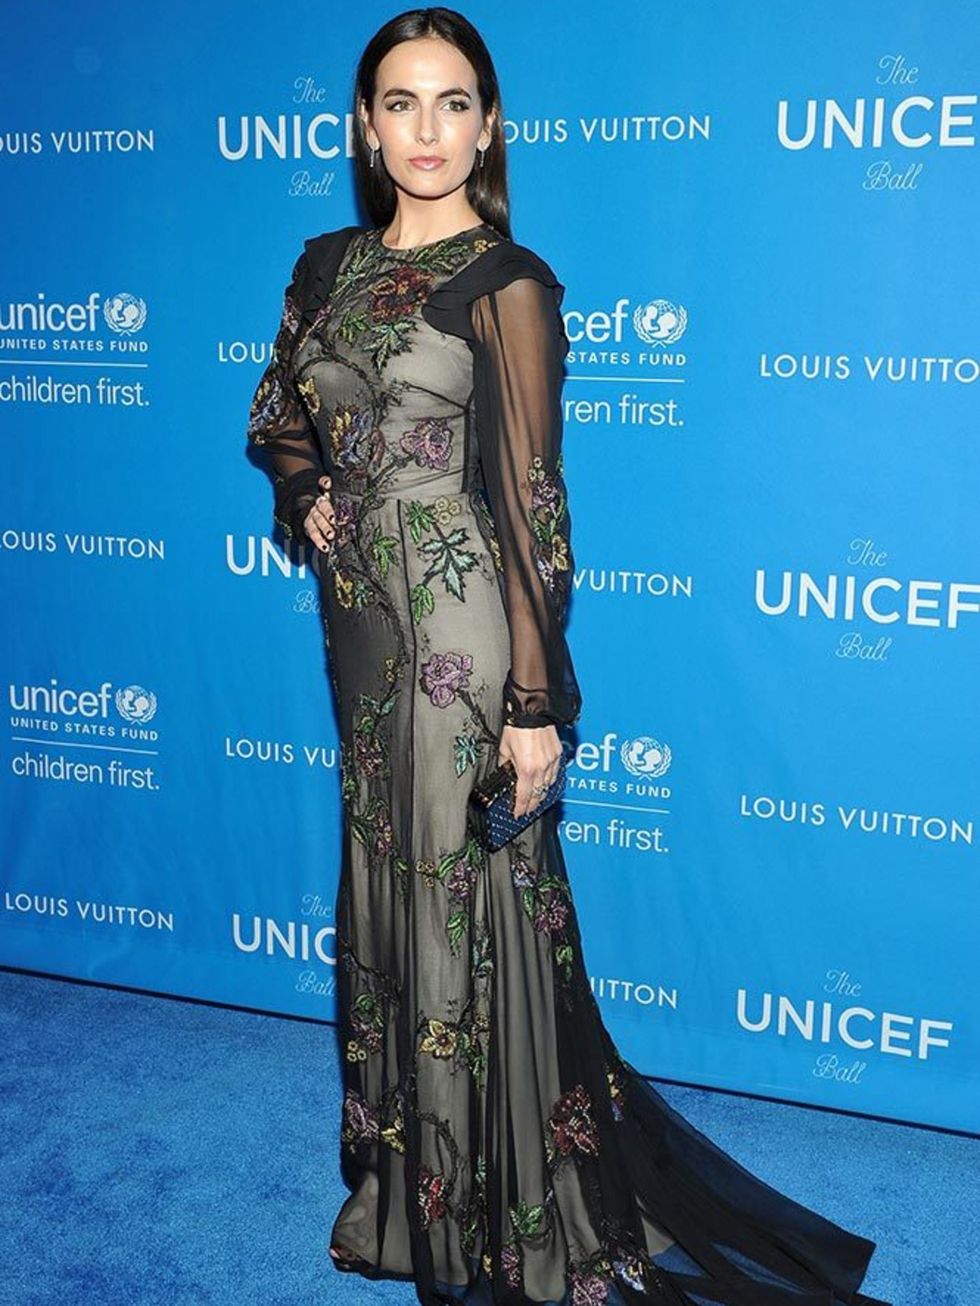 Louis Vuitton for UNICEF - LVP Intellectual Property Team